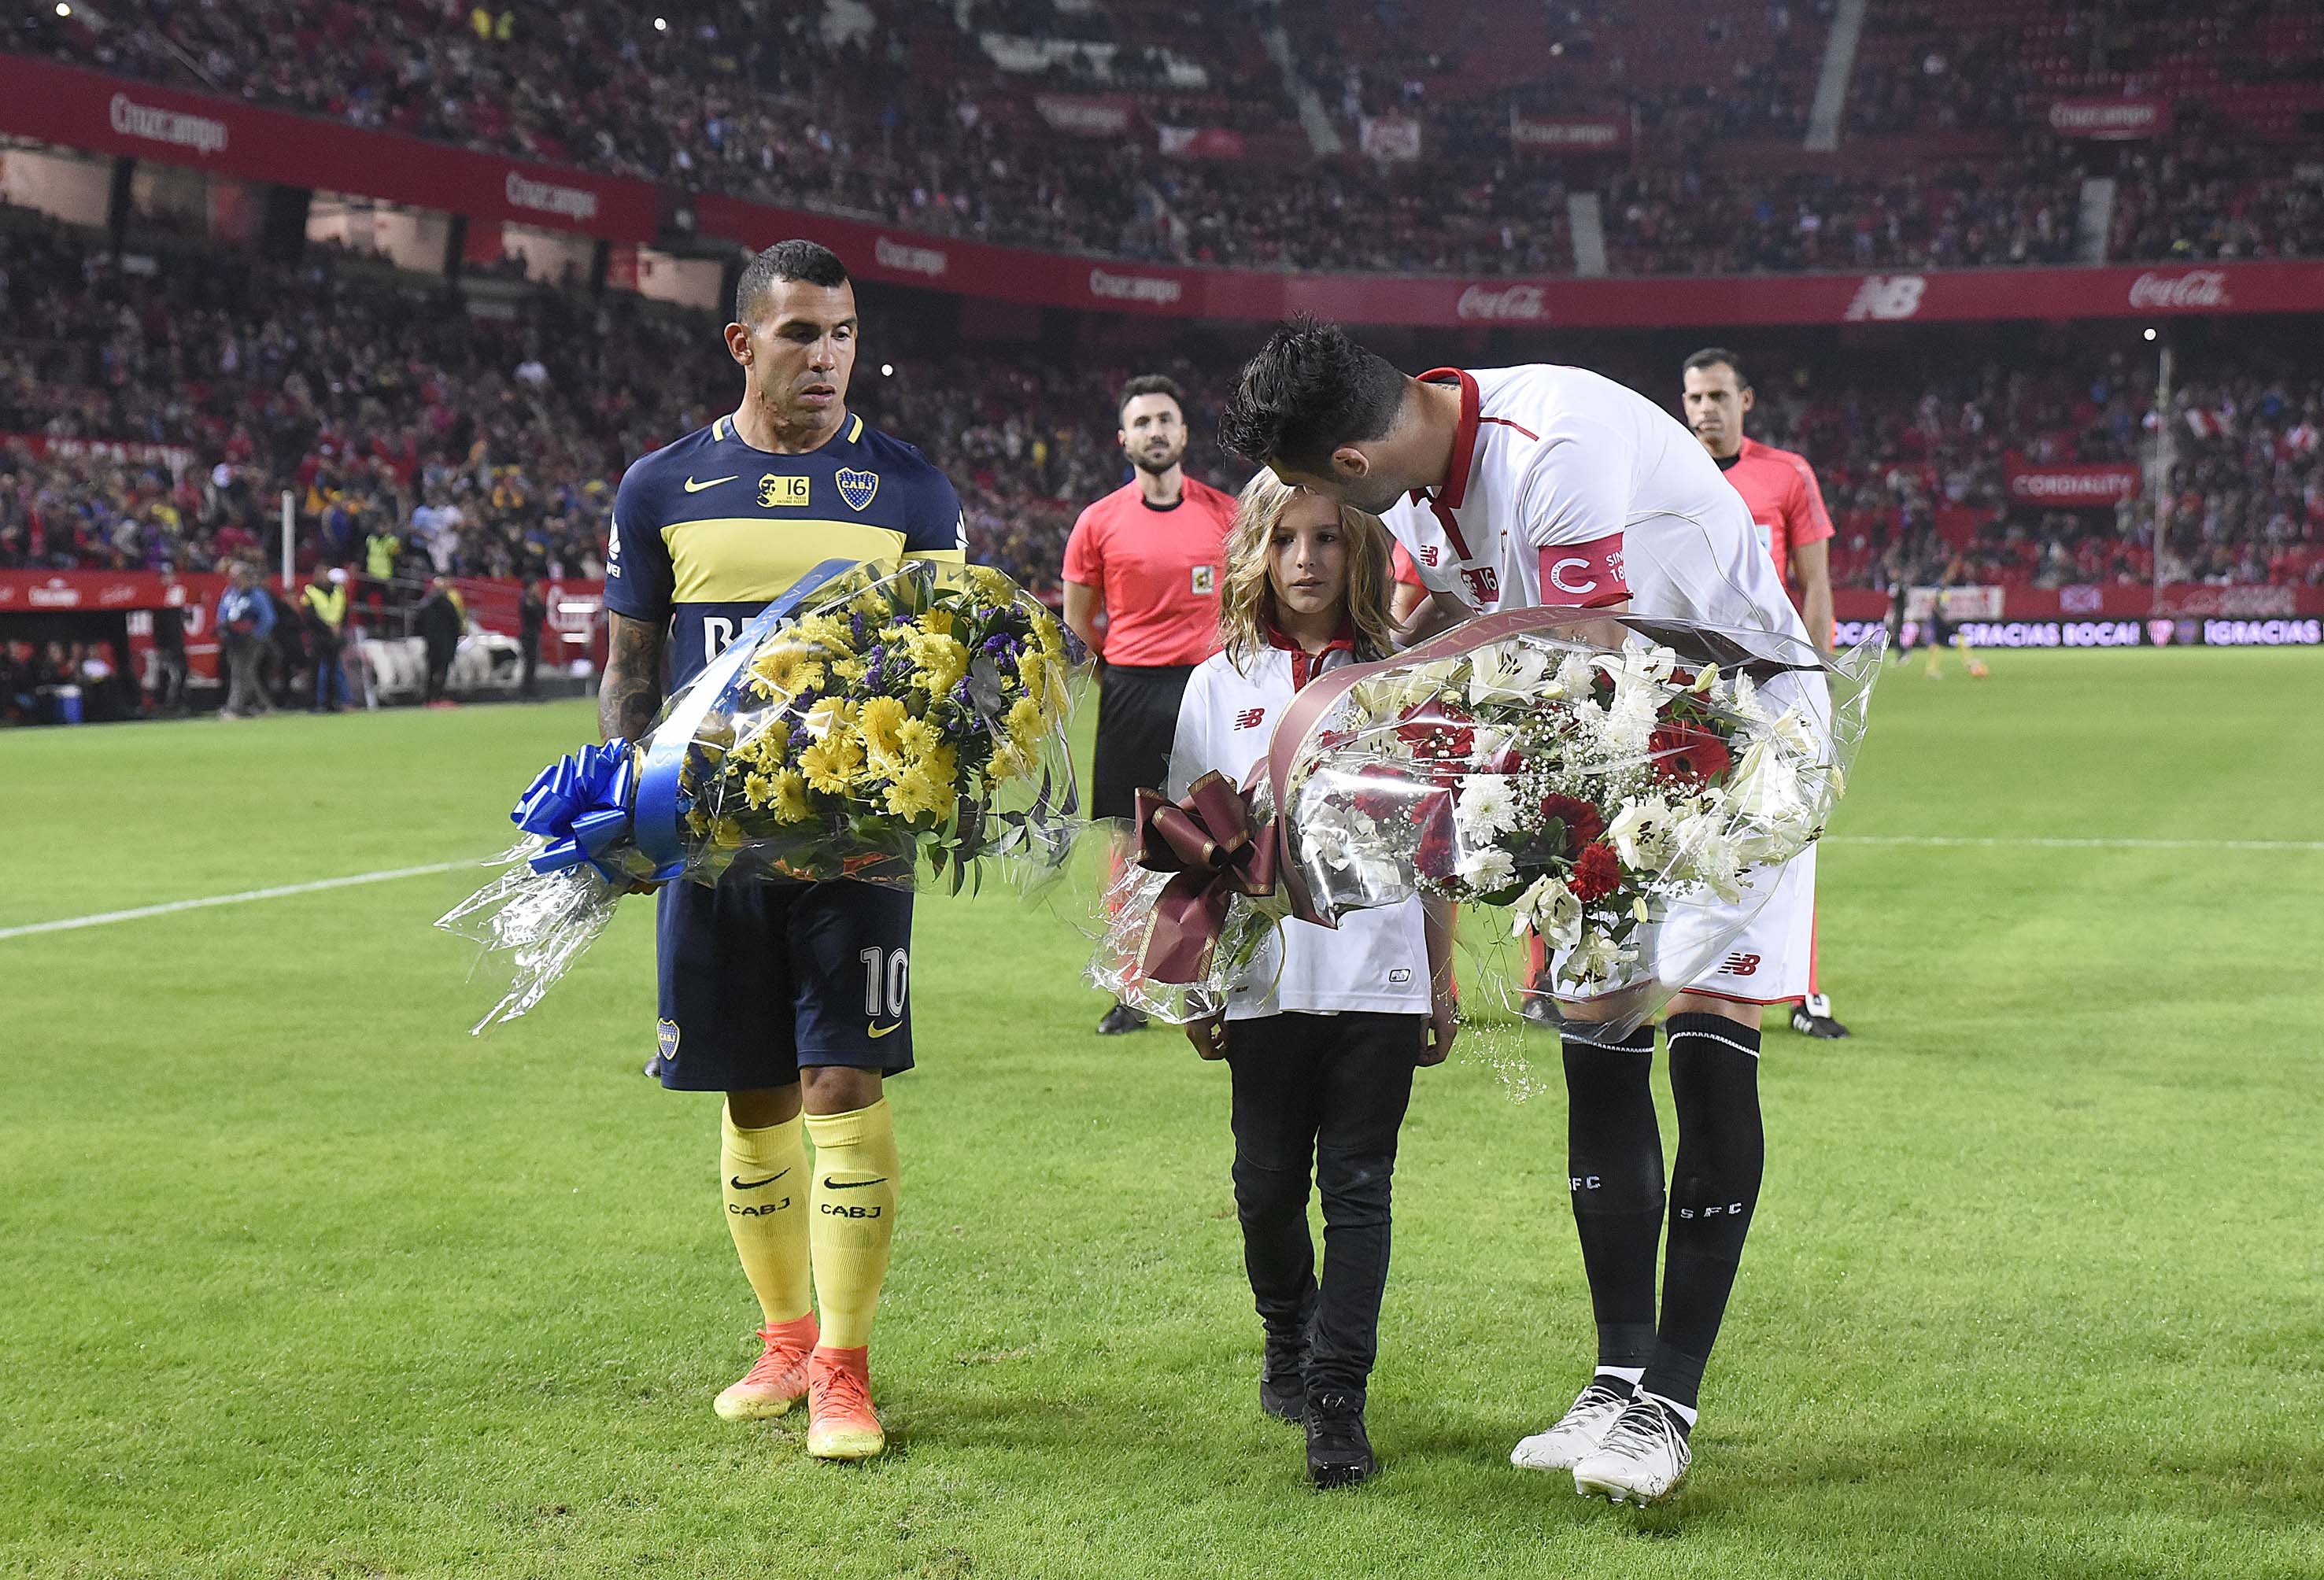  Floral offering in memory of Antonio Puerta